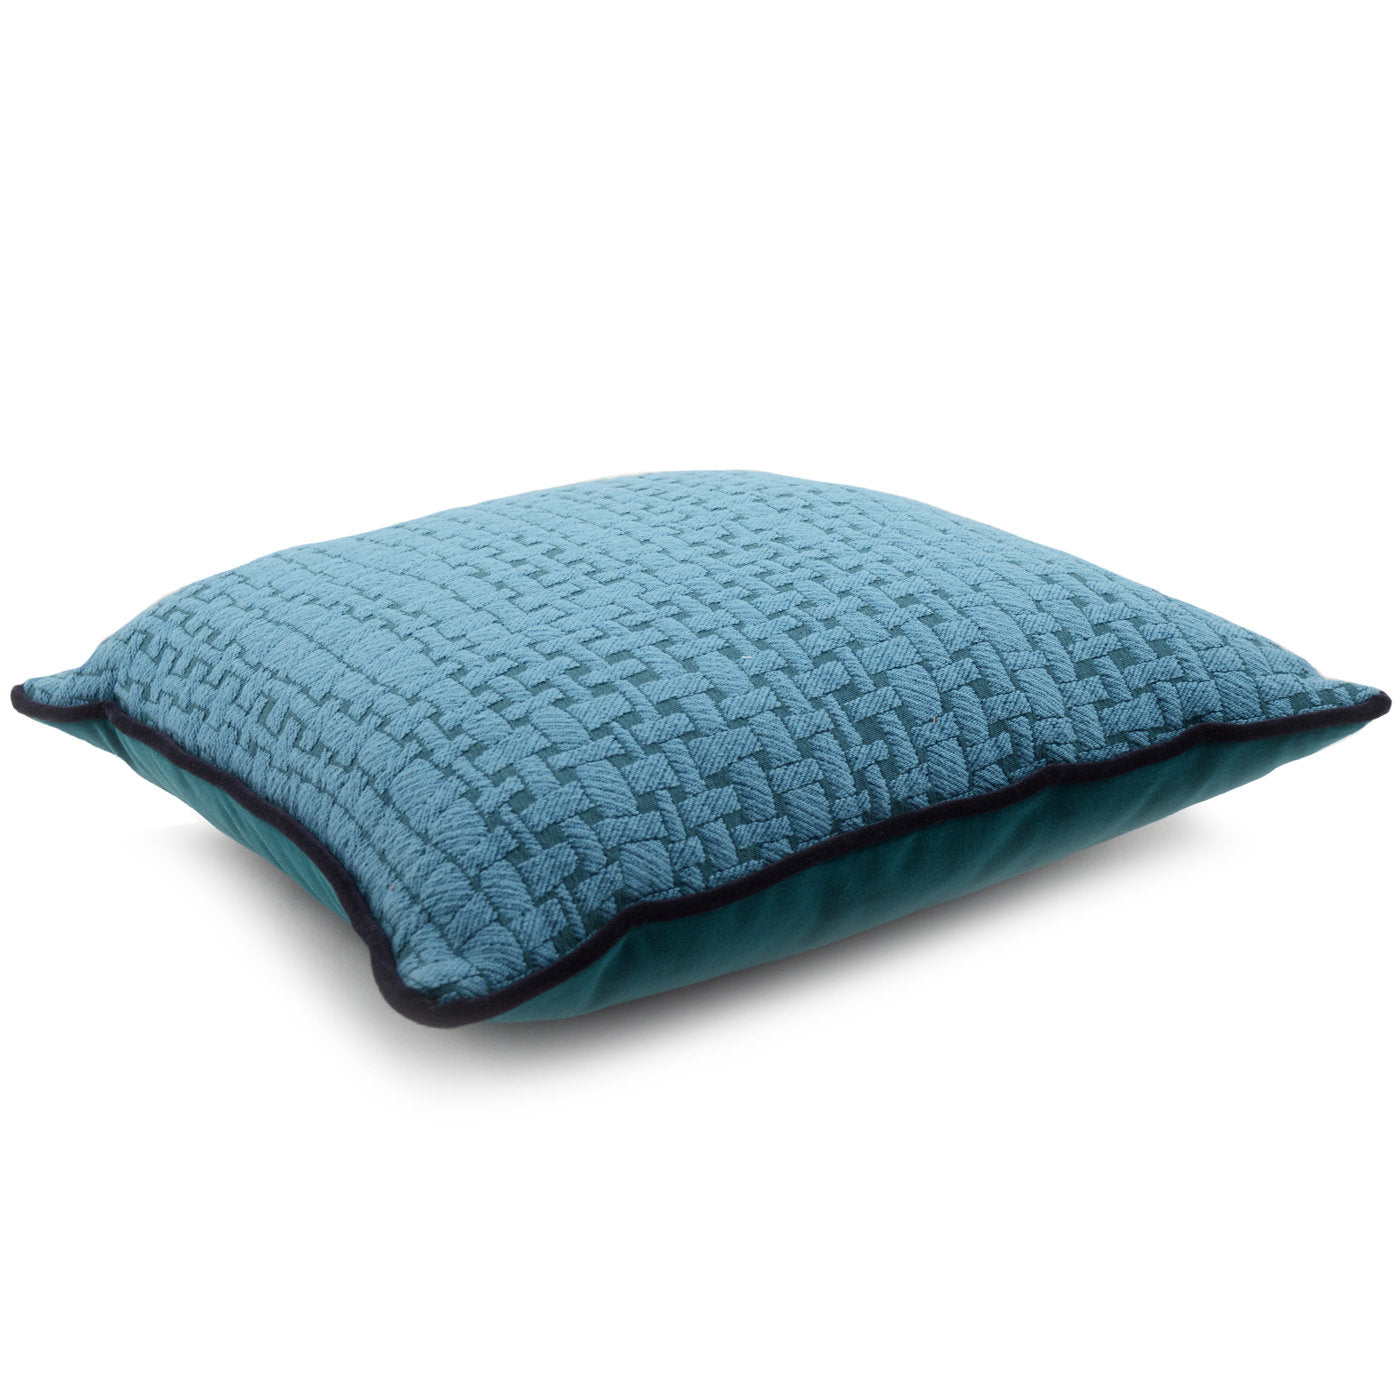 Light Blue Carré Cushion in geometric jacquard fabric - Alternative view 2